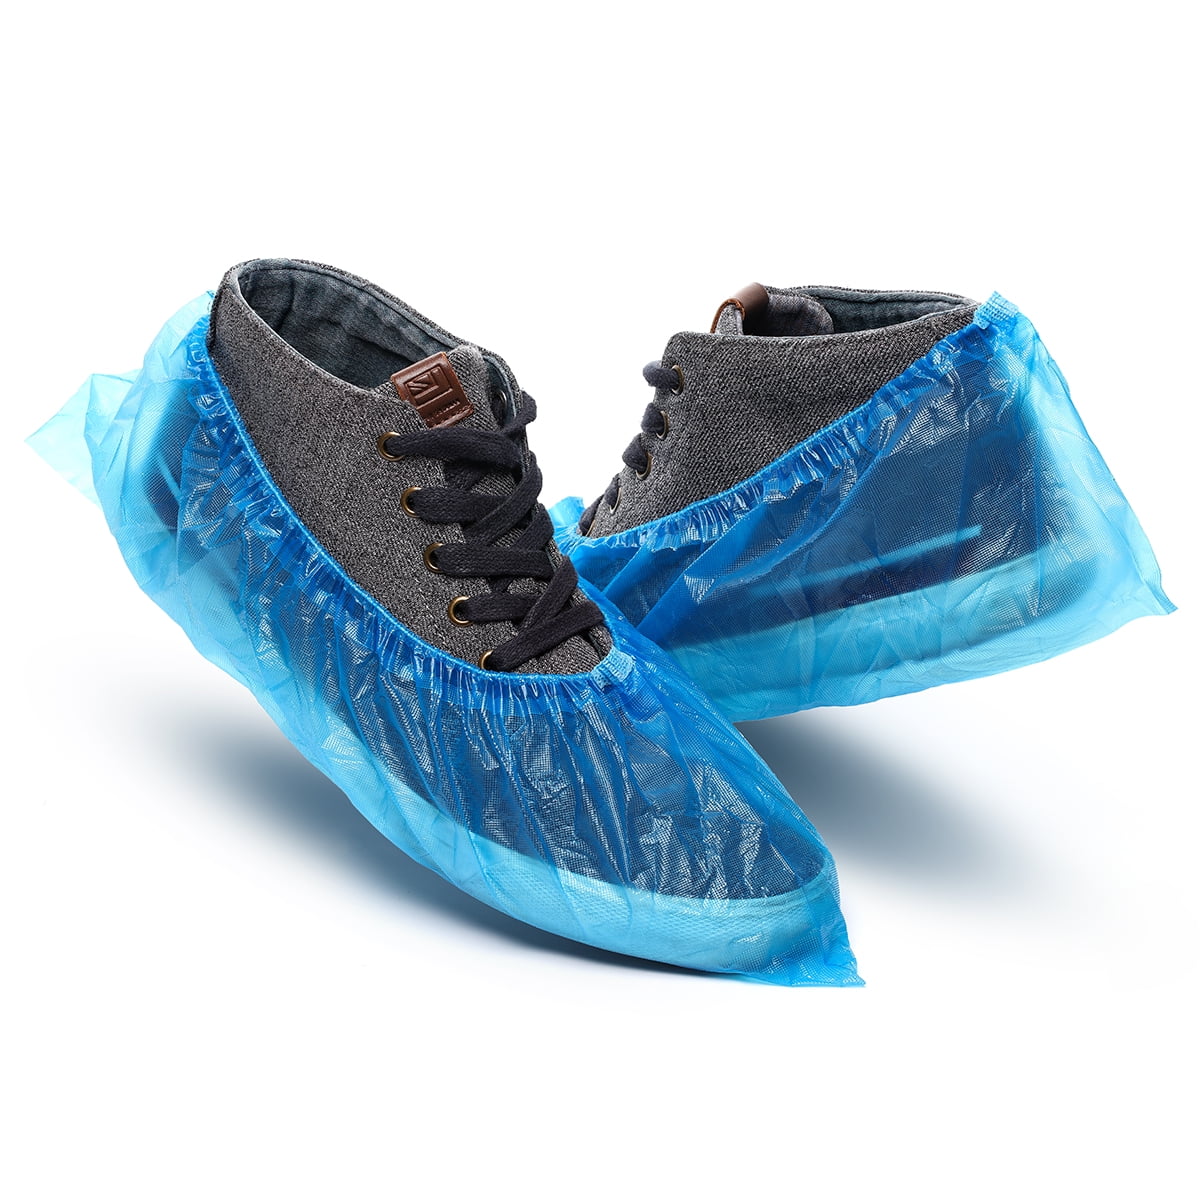 plastic shoe covers walmart